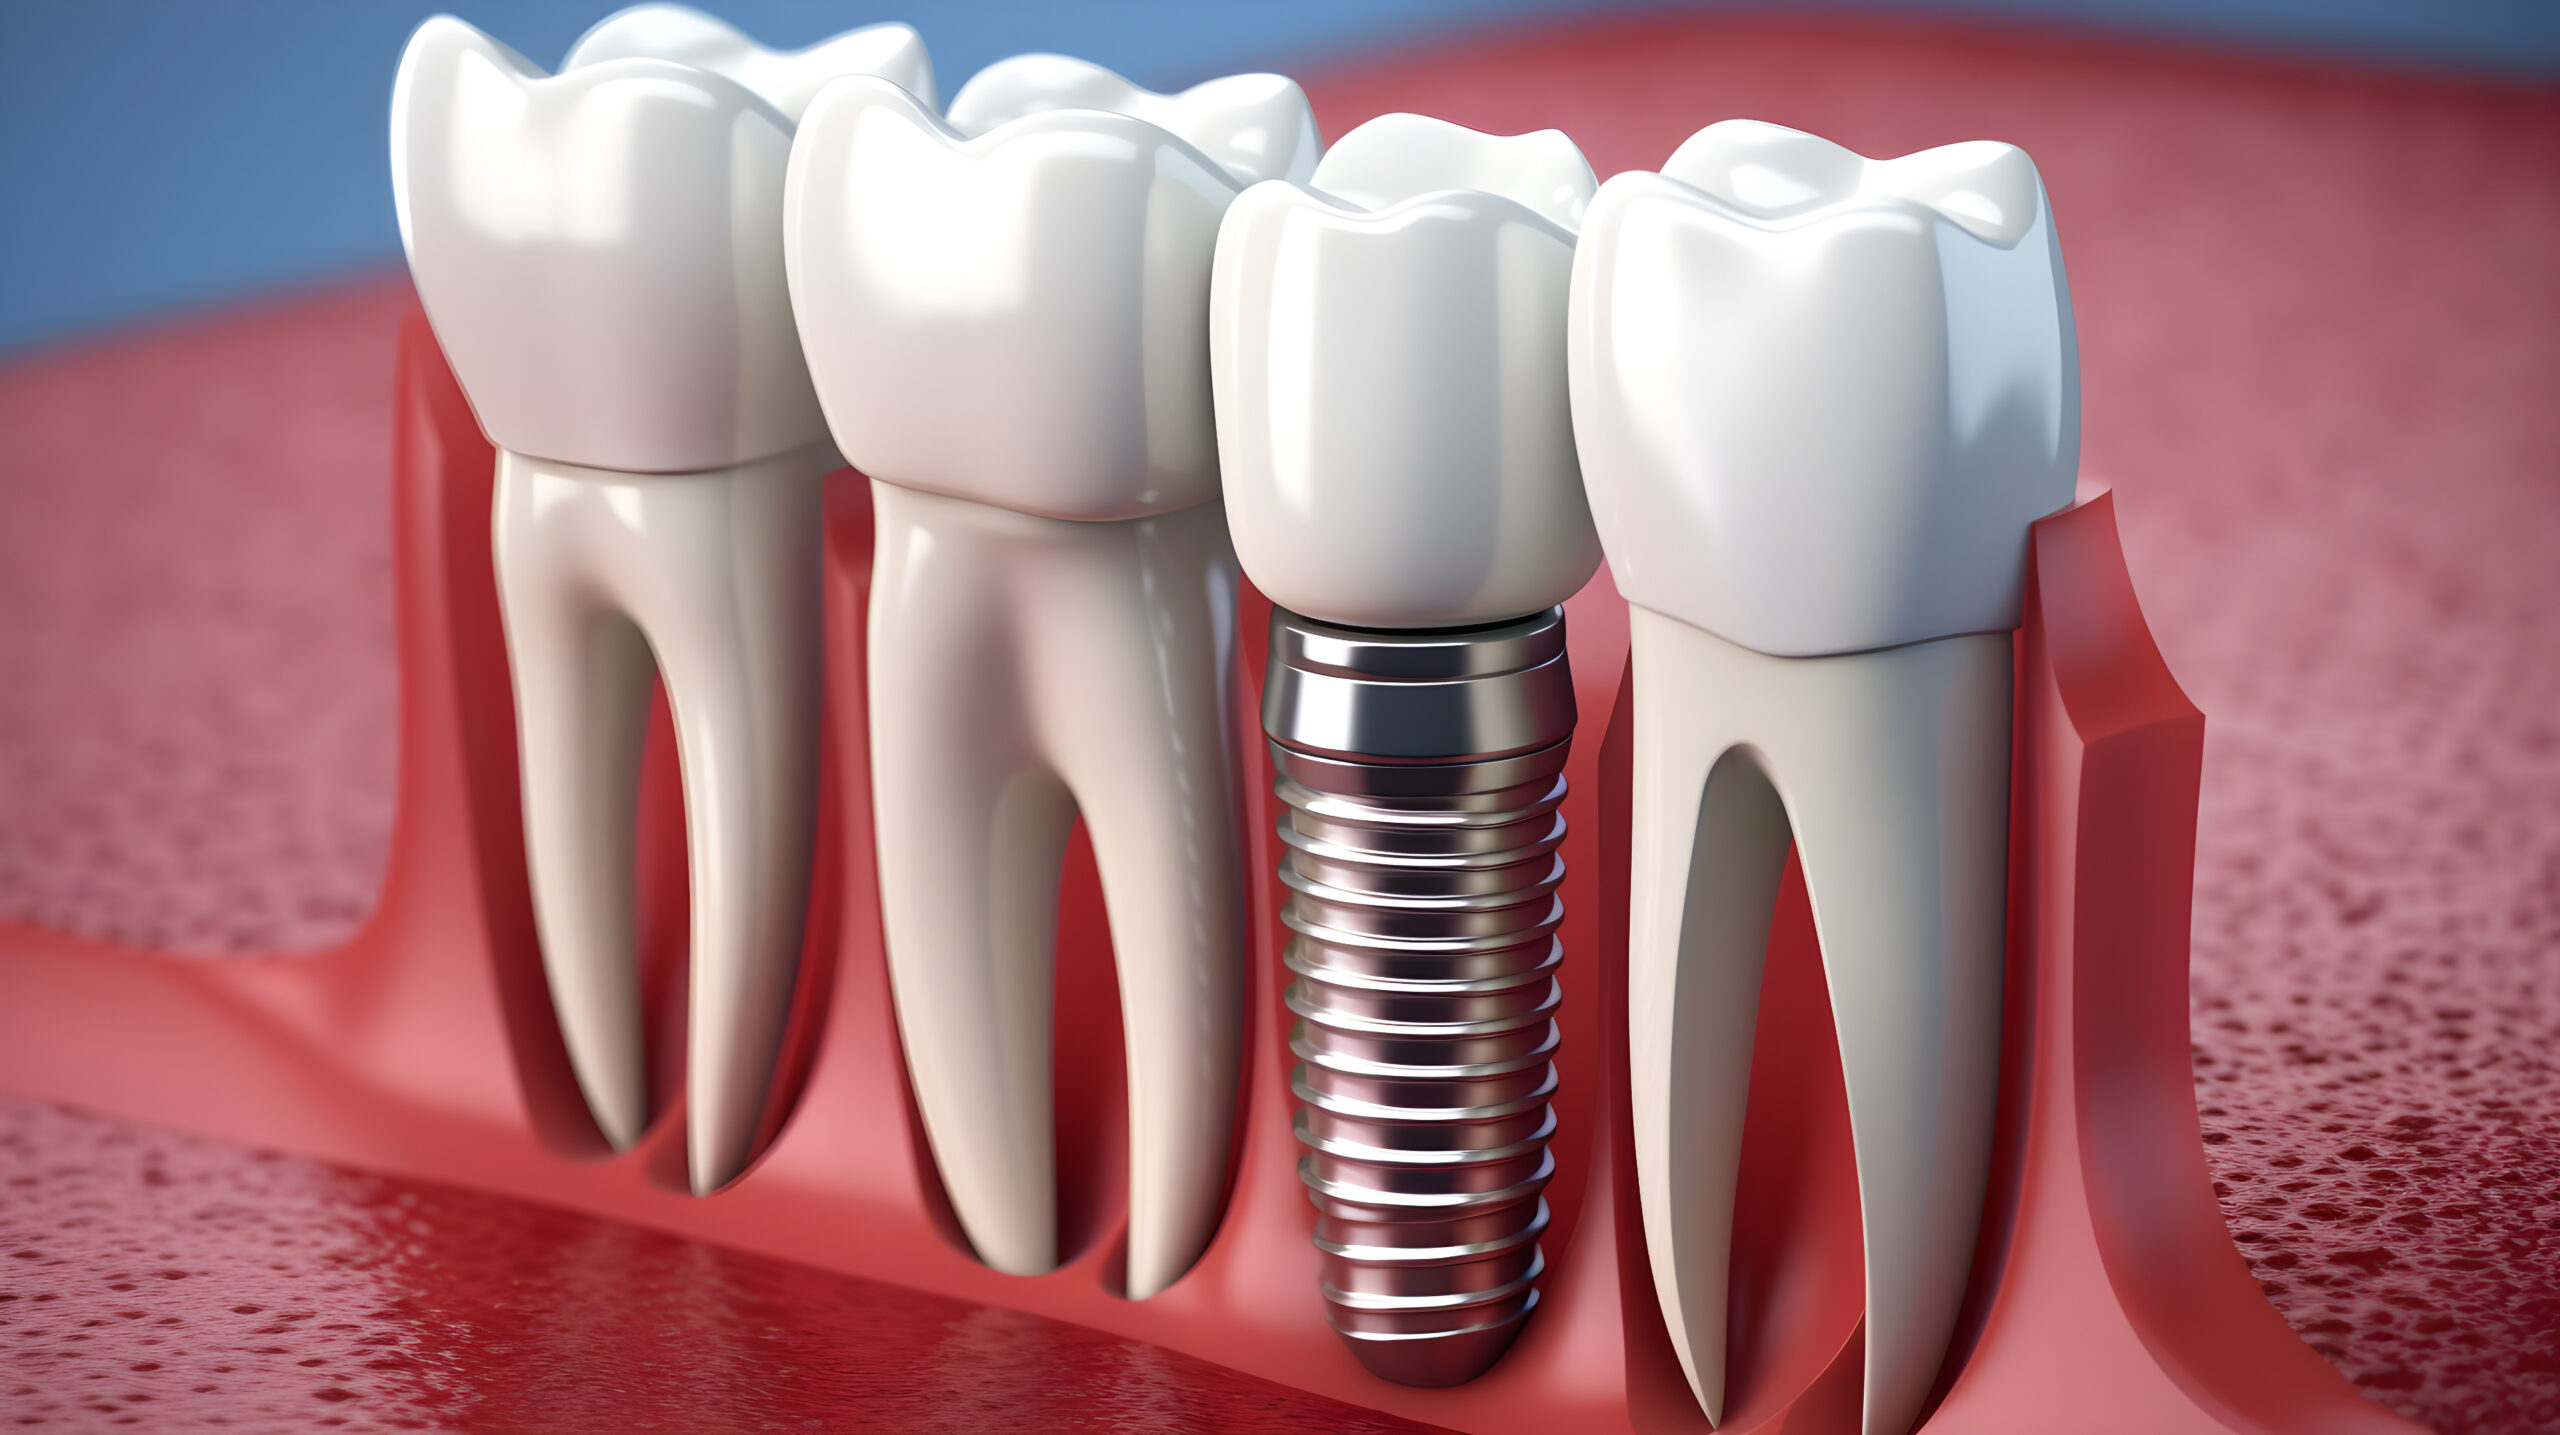 teeth implants with metal.